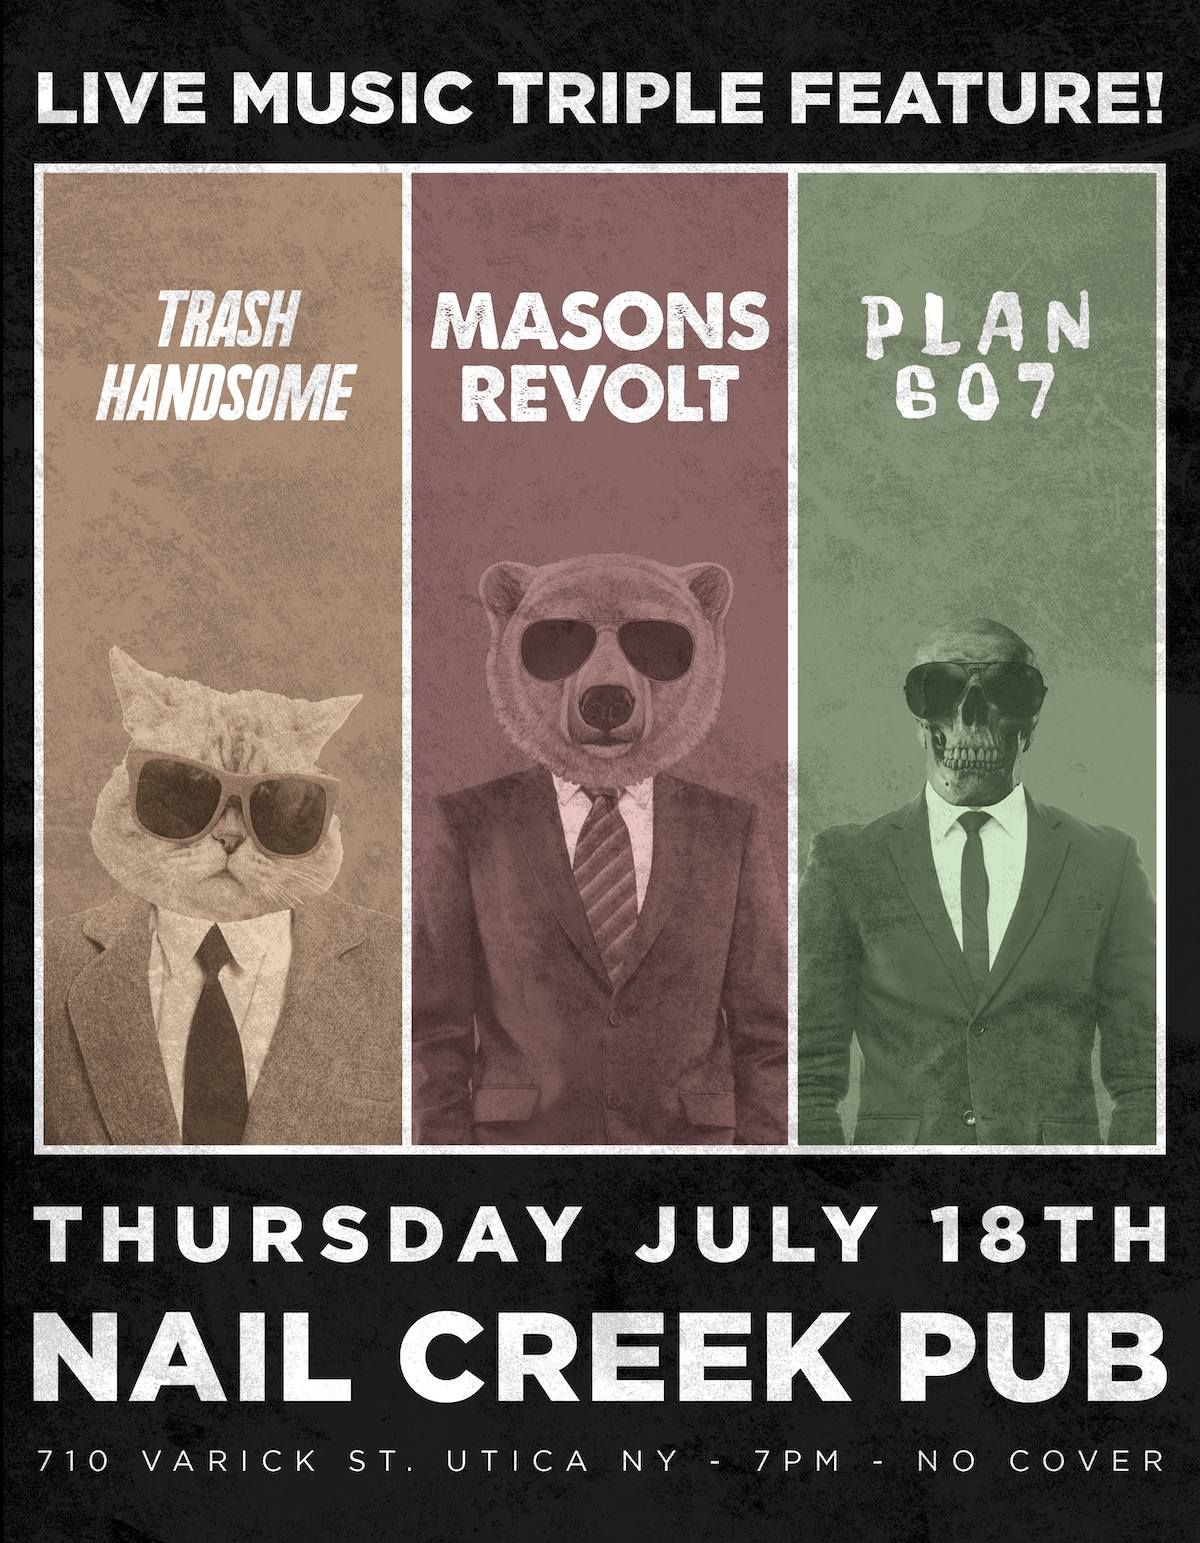 Masons Revolt, Plan 607 & Trash handsome @ Nail Creek